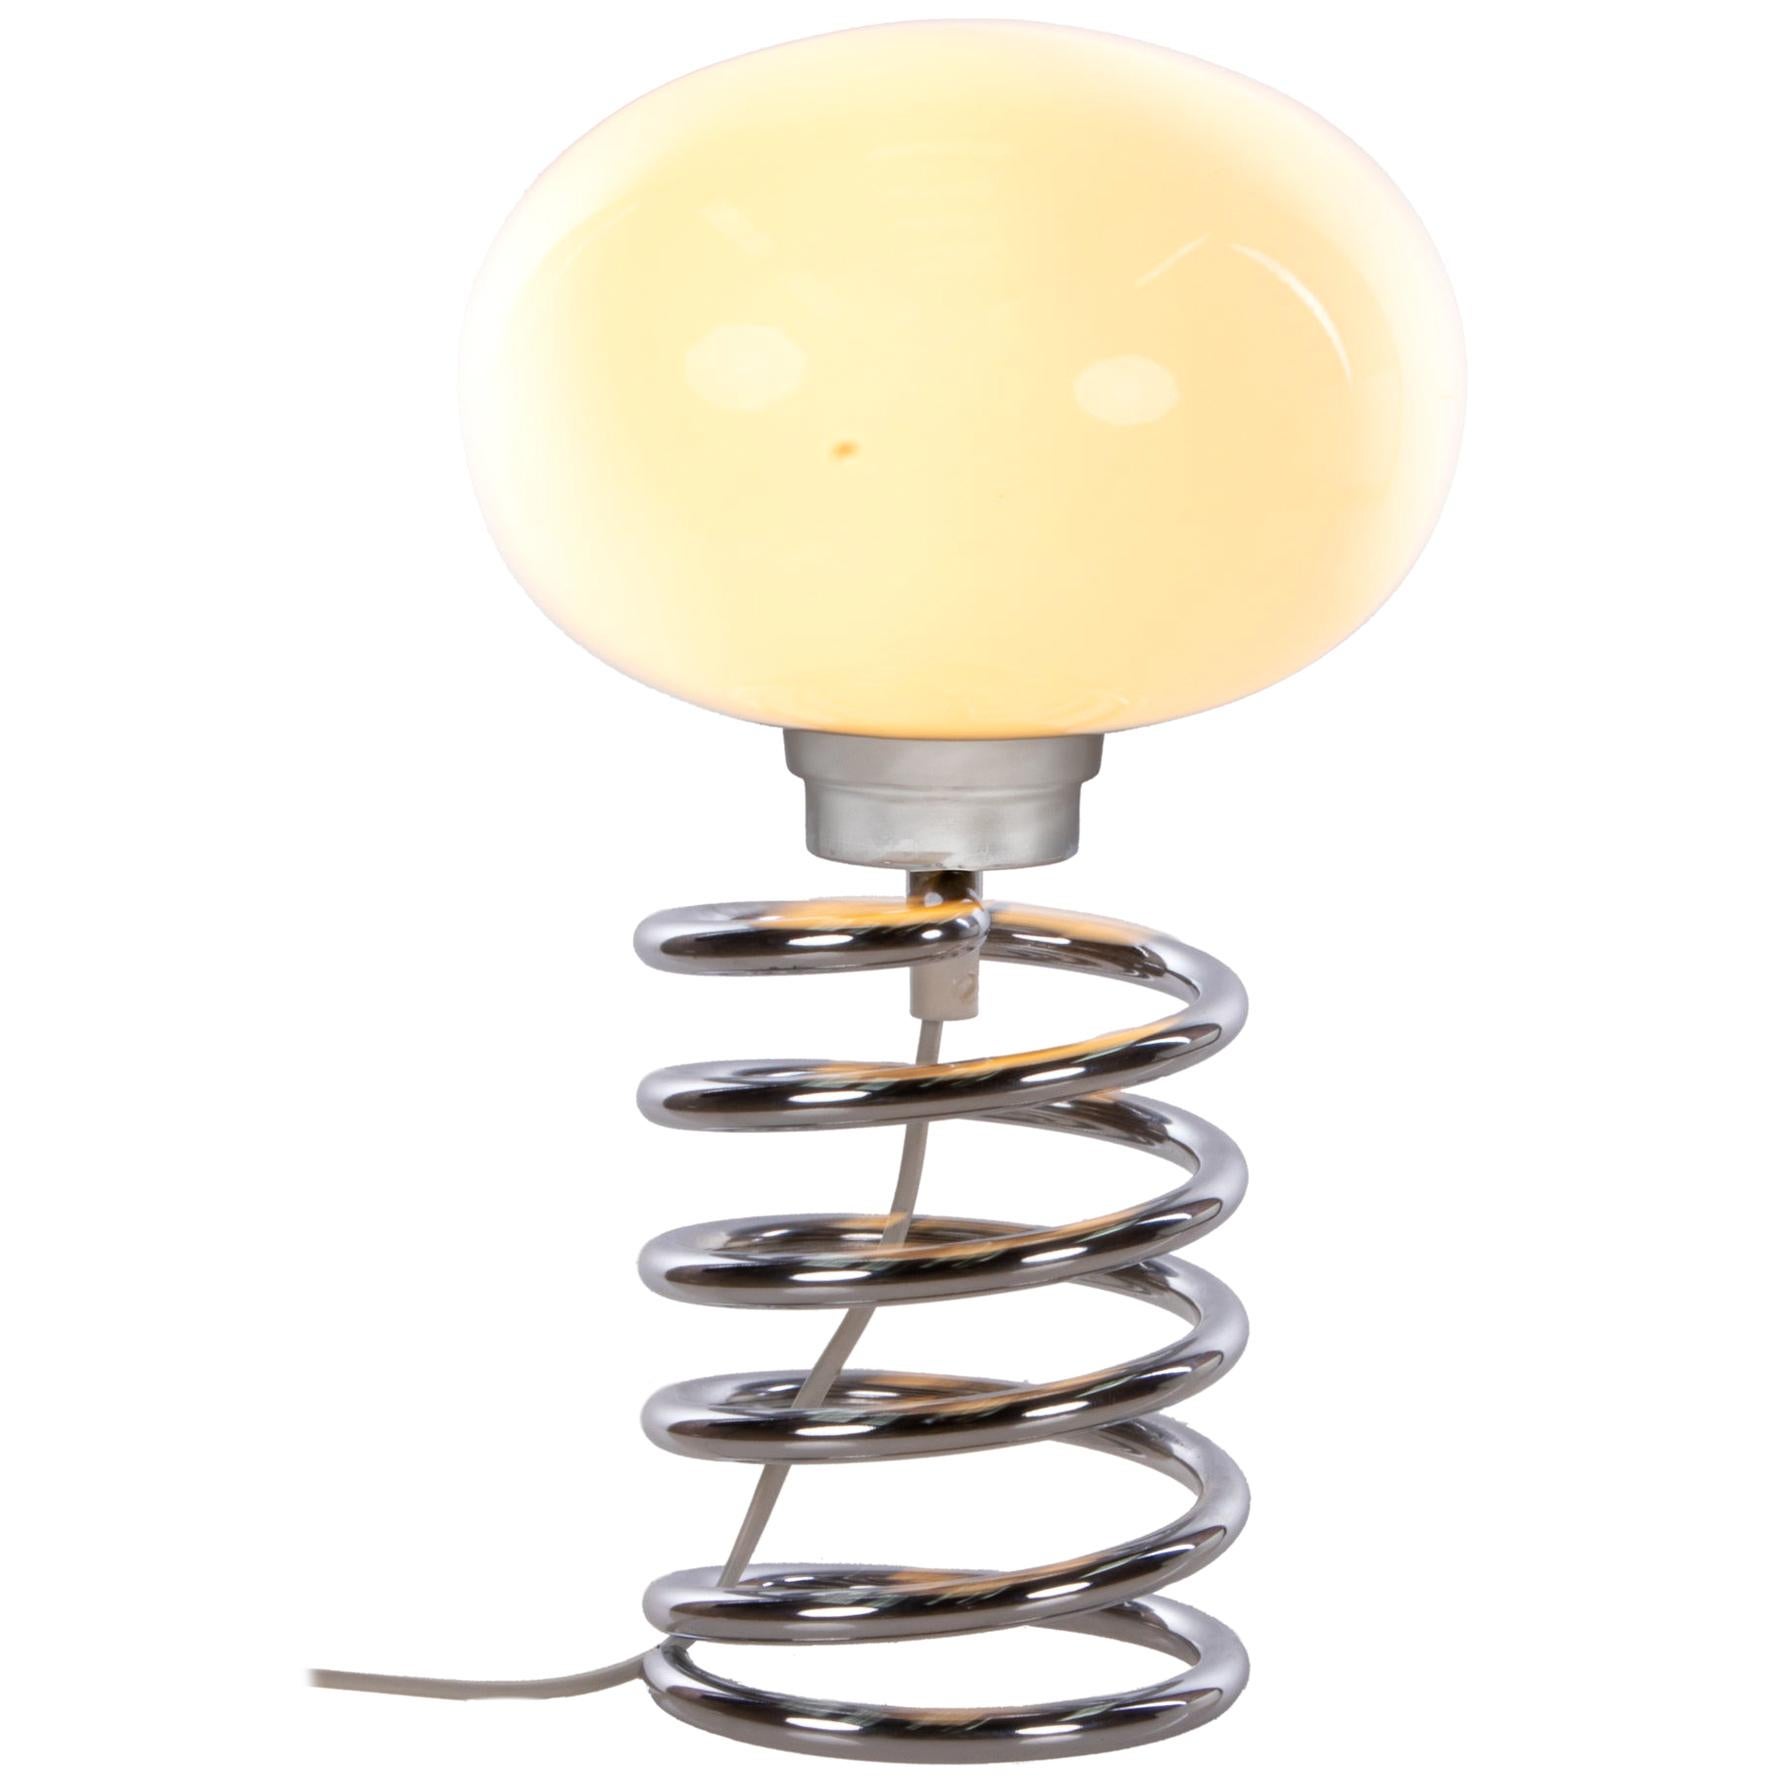 1965 Design M Ingo Maurer Petite Table Lamp ‘Spirale’ Glass & Chrome For Sale